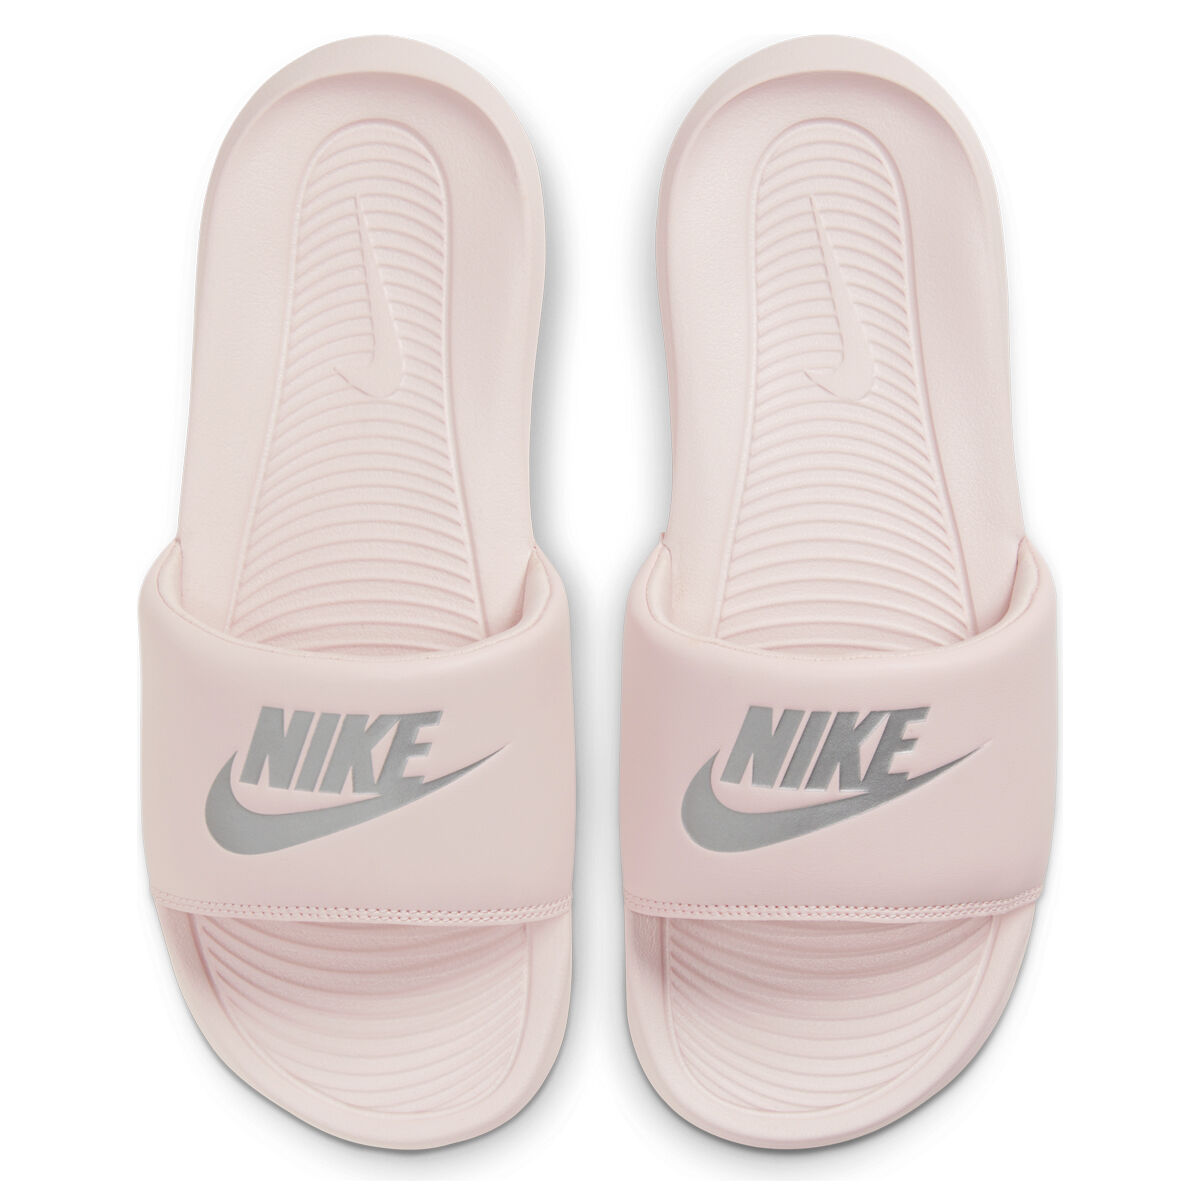 womens nike sandals pink